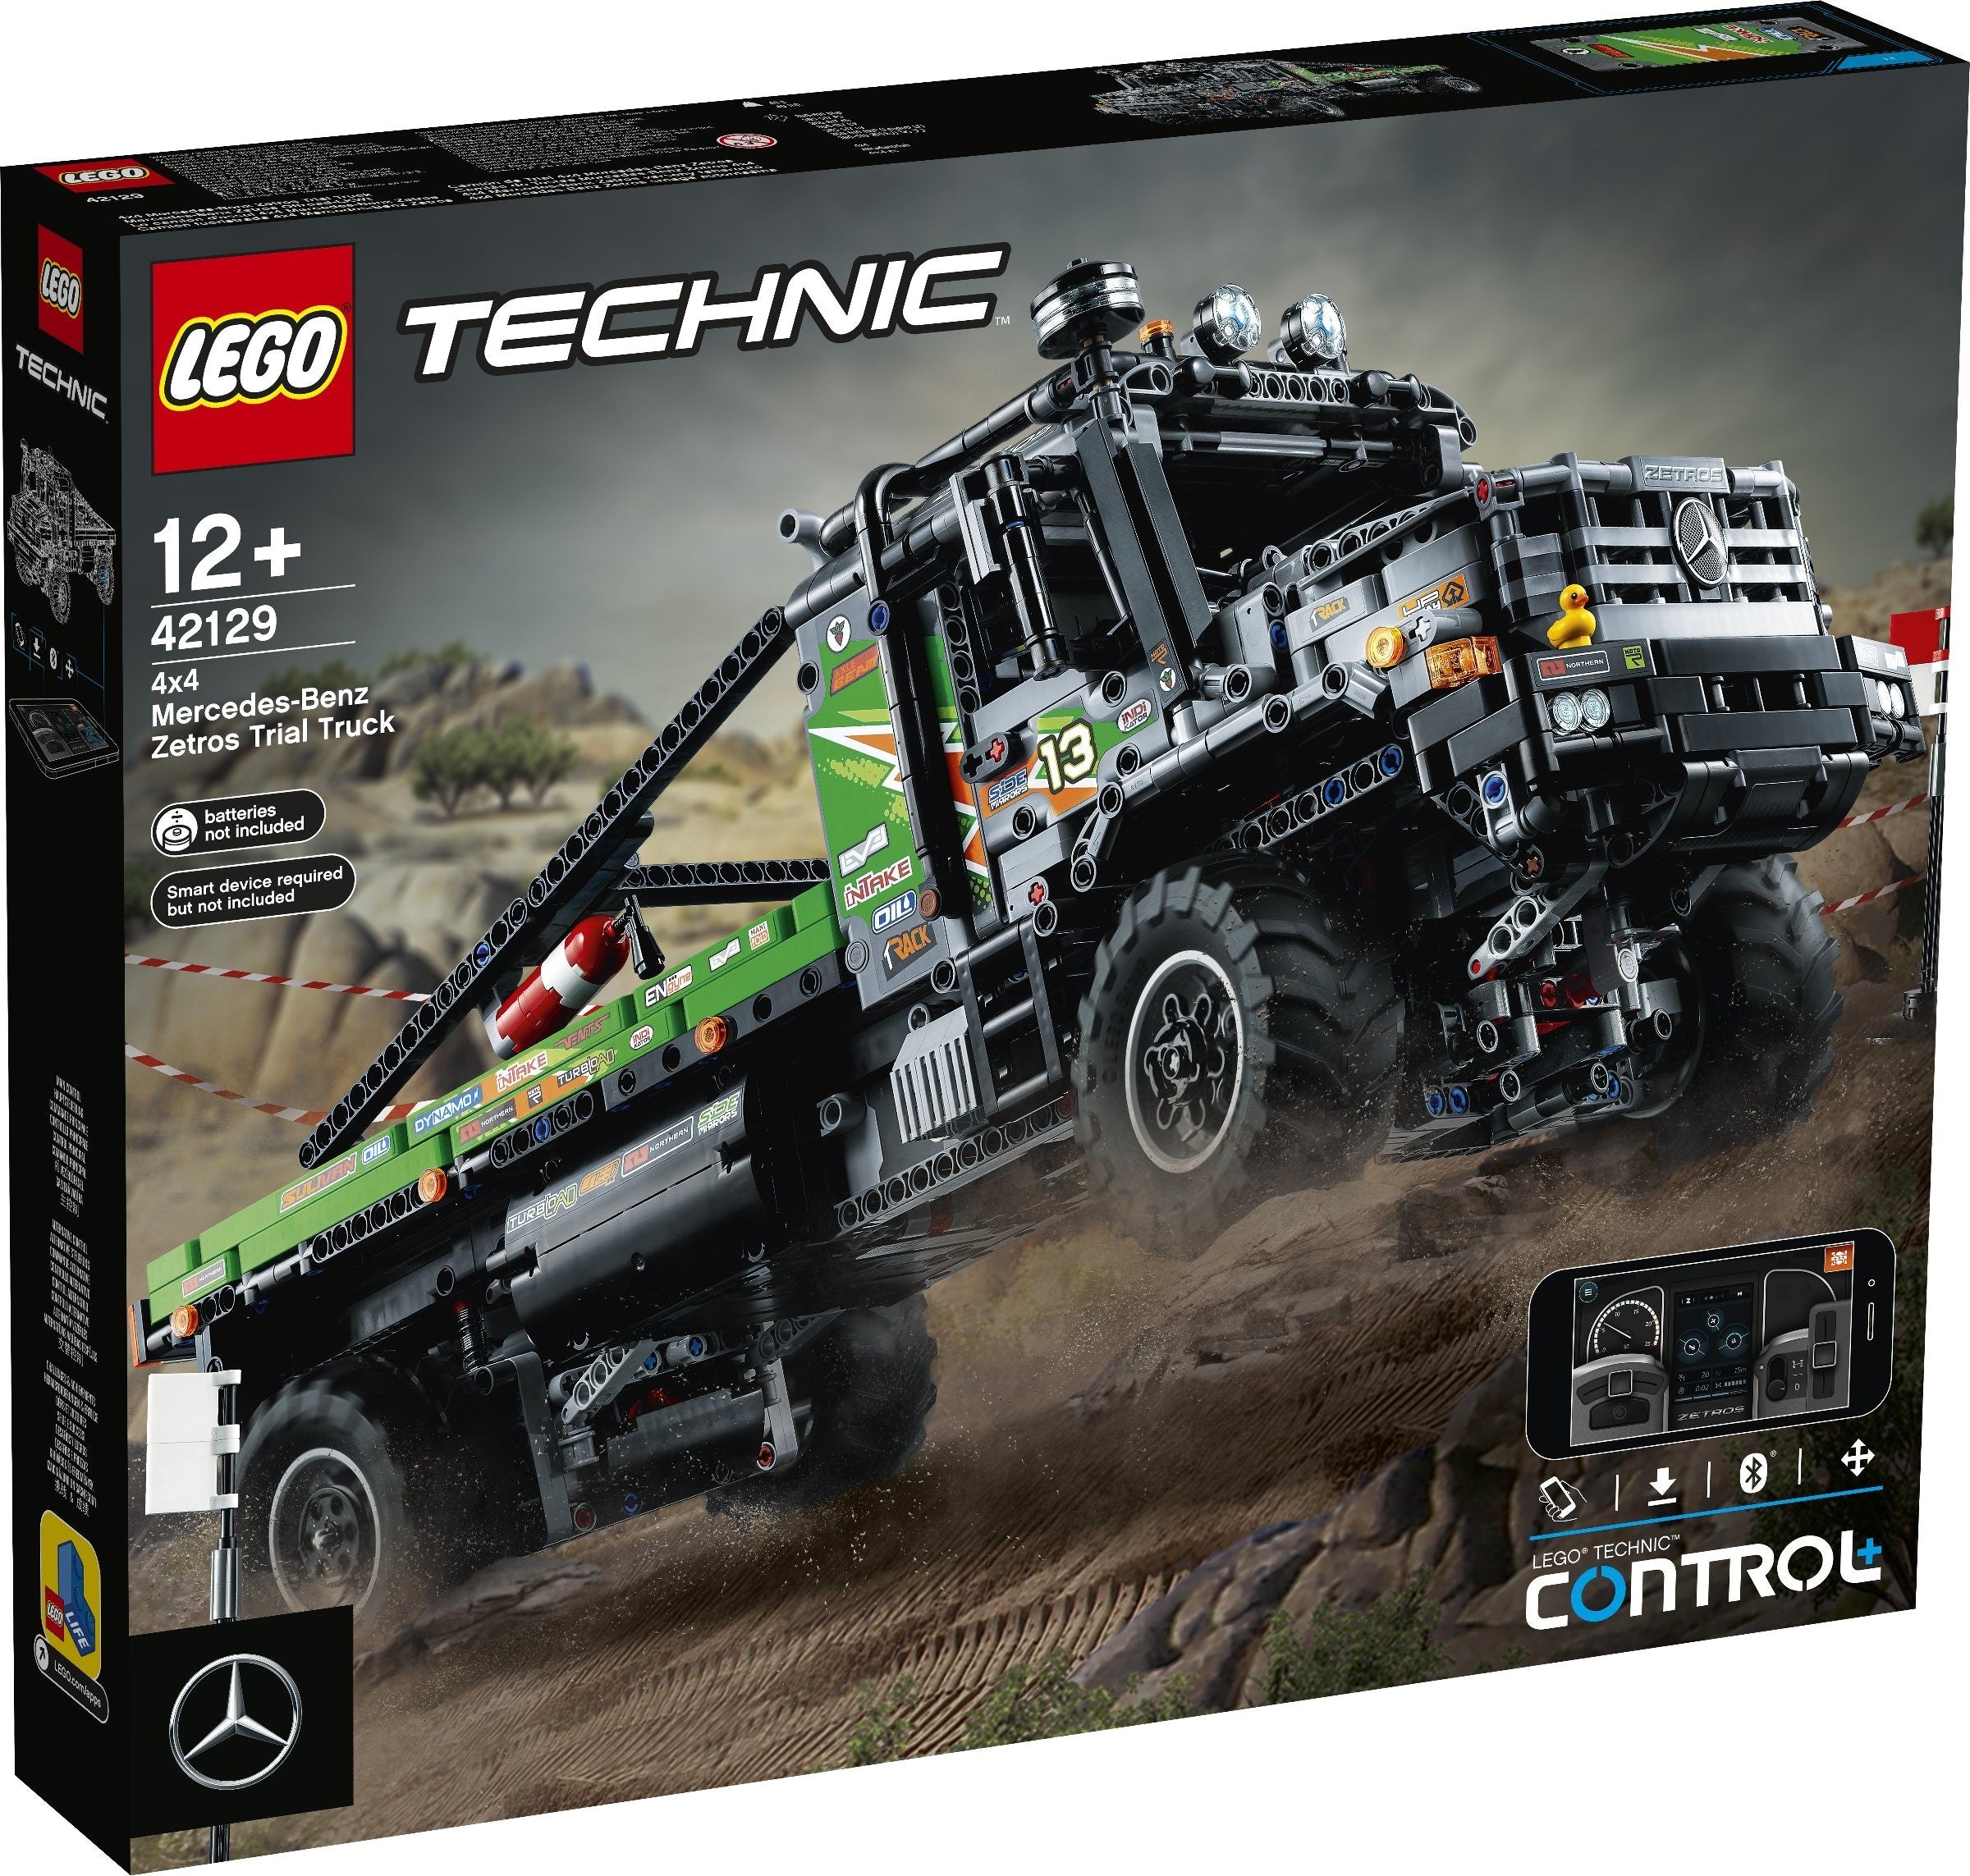 Lego Technic 42129 - 4x4 Mercedes-Benz Zetros Trial Truck